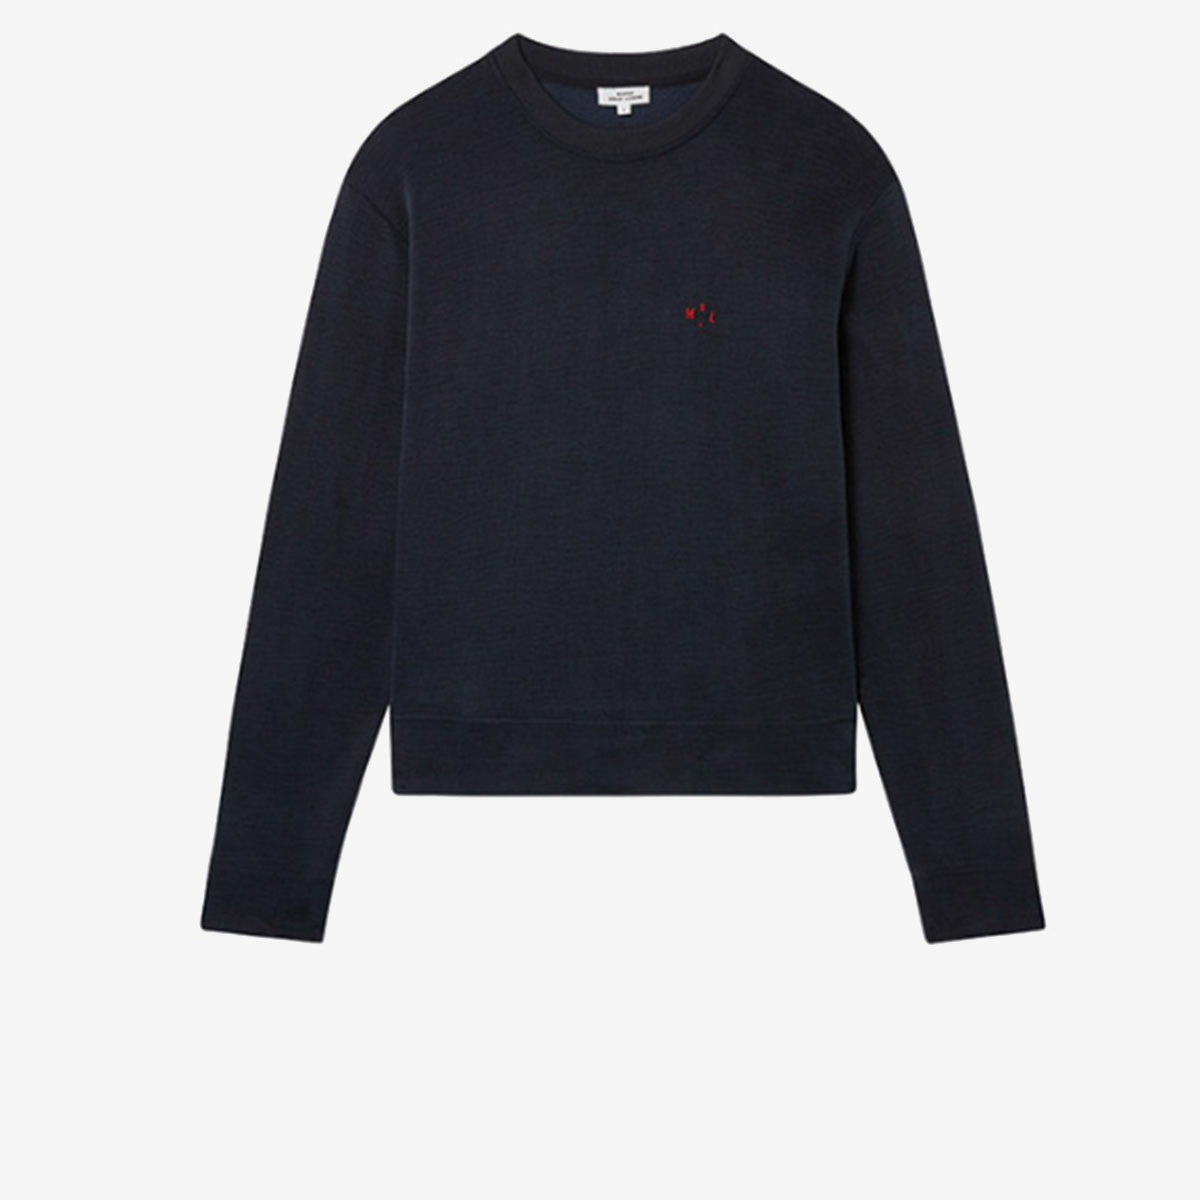 Sweatshirt Campden, Navy - Long sleeve round neck sweatshirt - Cotton - image 1